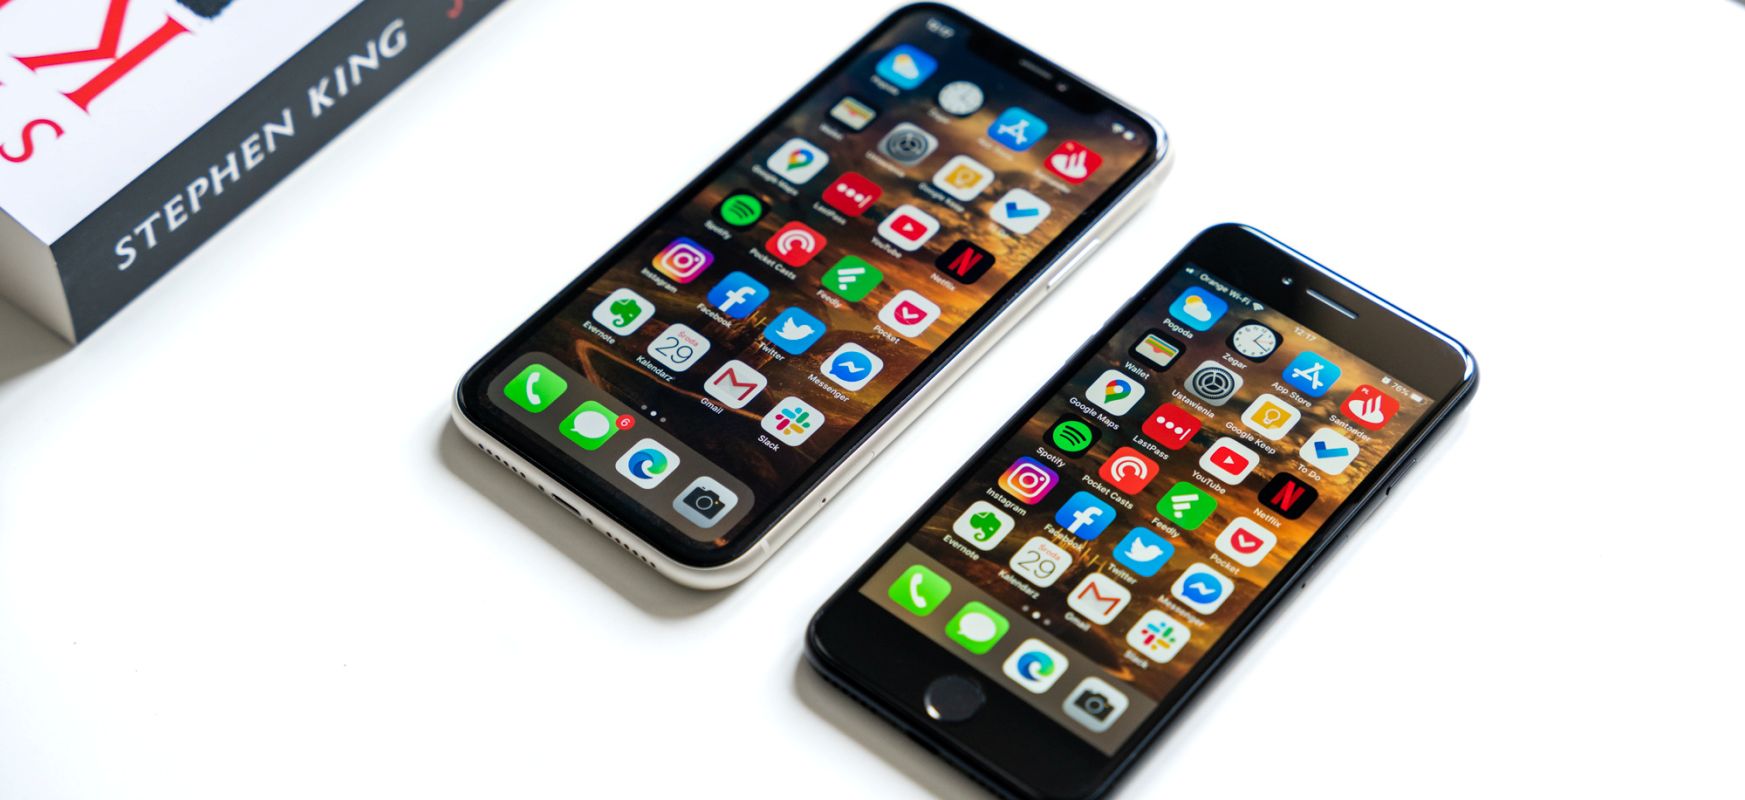  IPhone merkea versus iPhone oso merkea.  iPhone 11 vs iPhone SE - duelua
